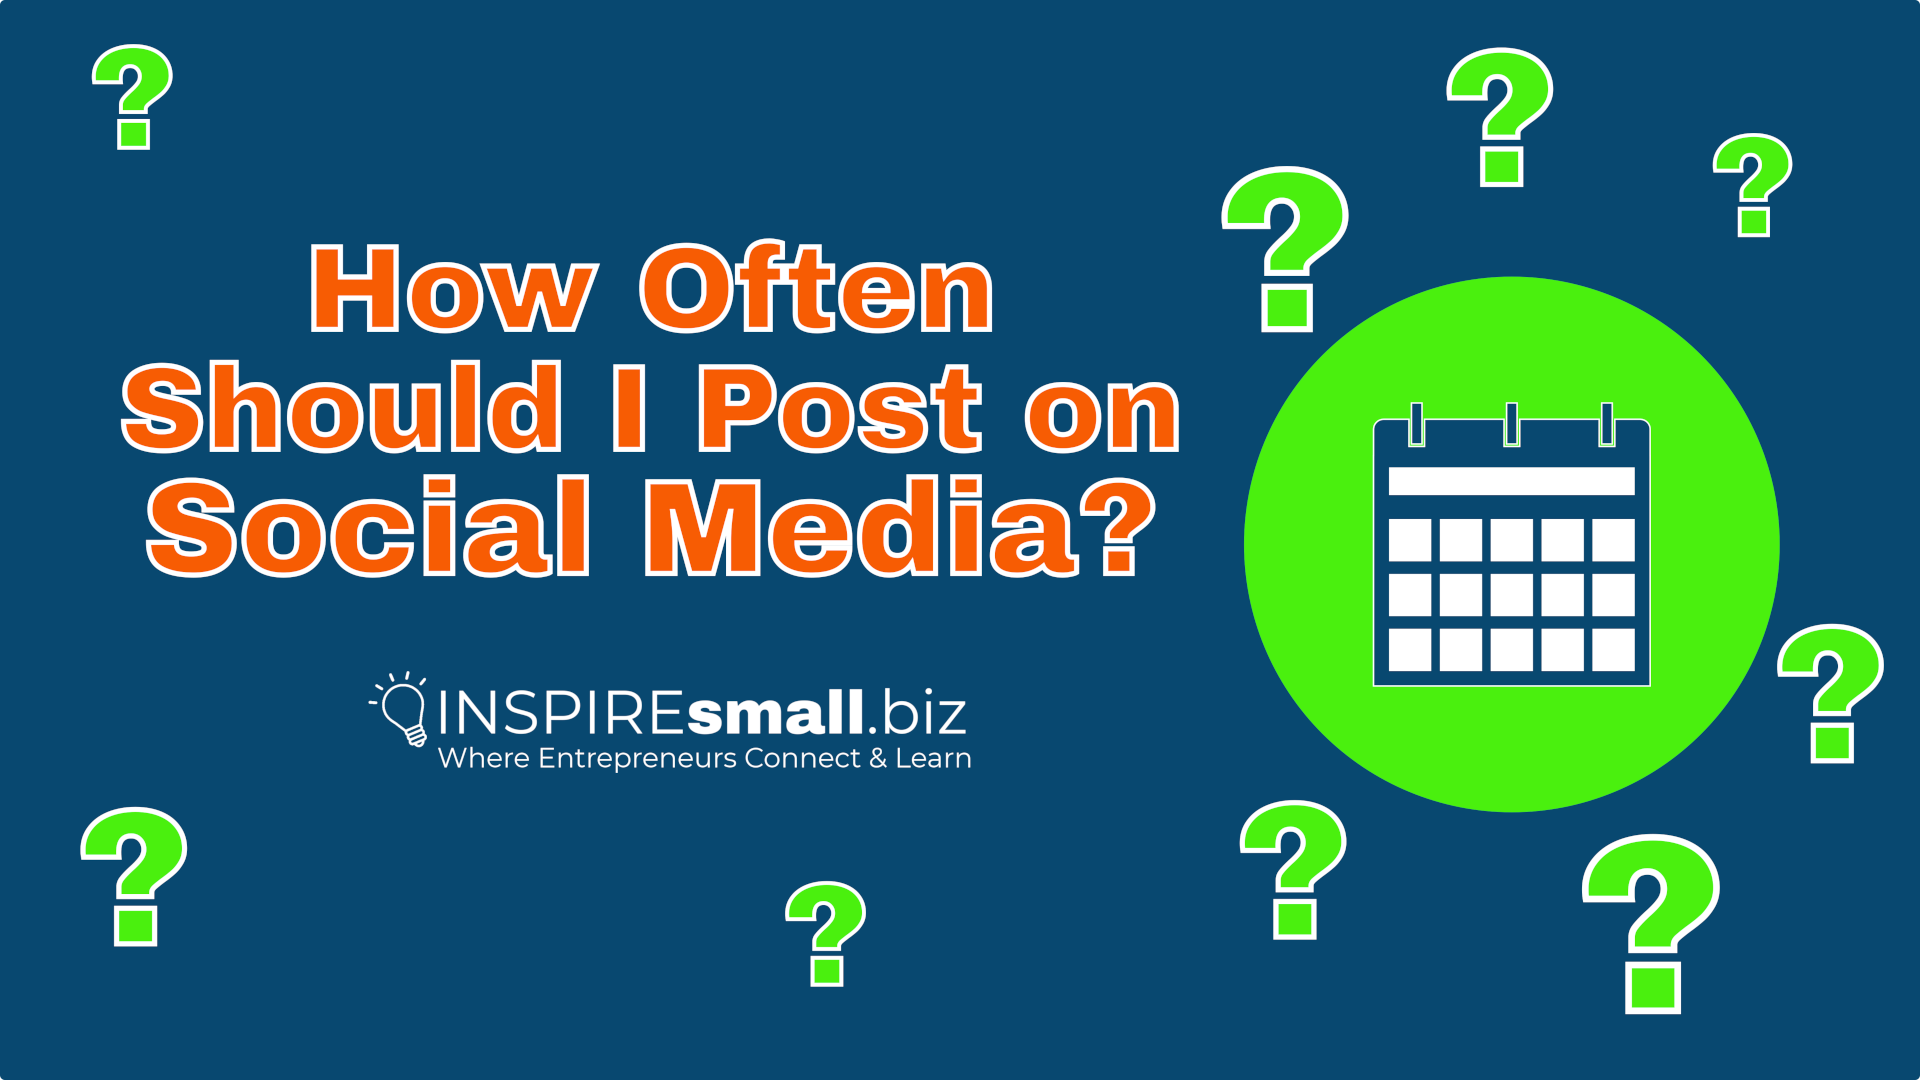 How Often Should I Post on Social Media?